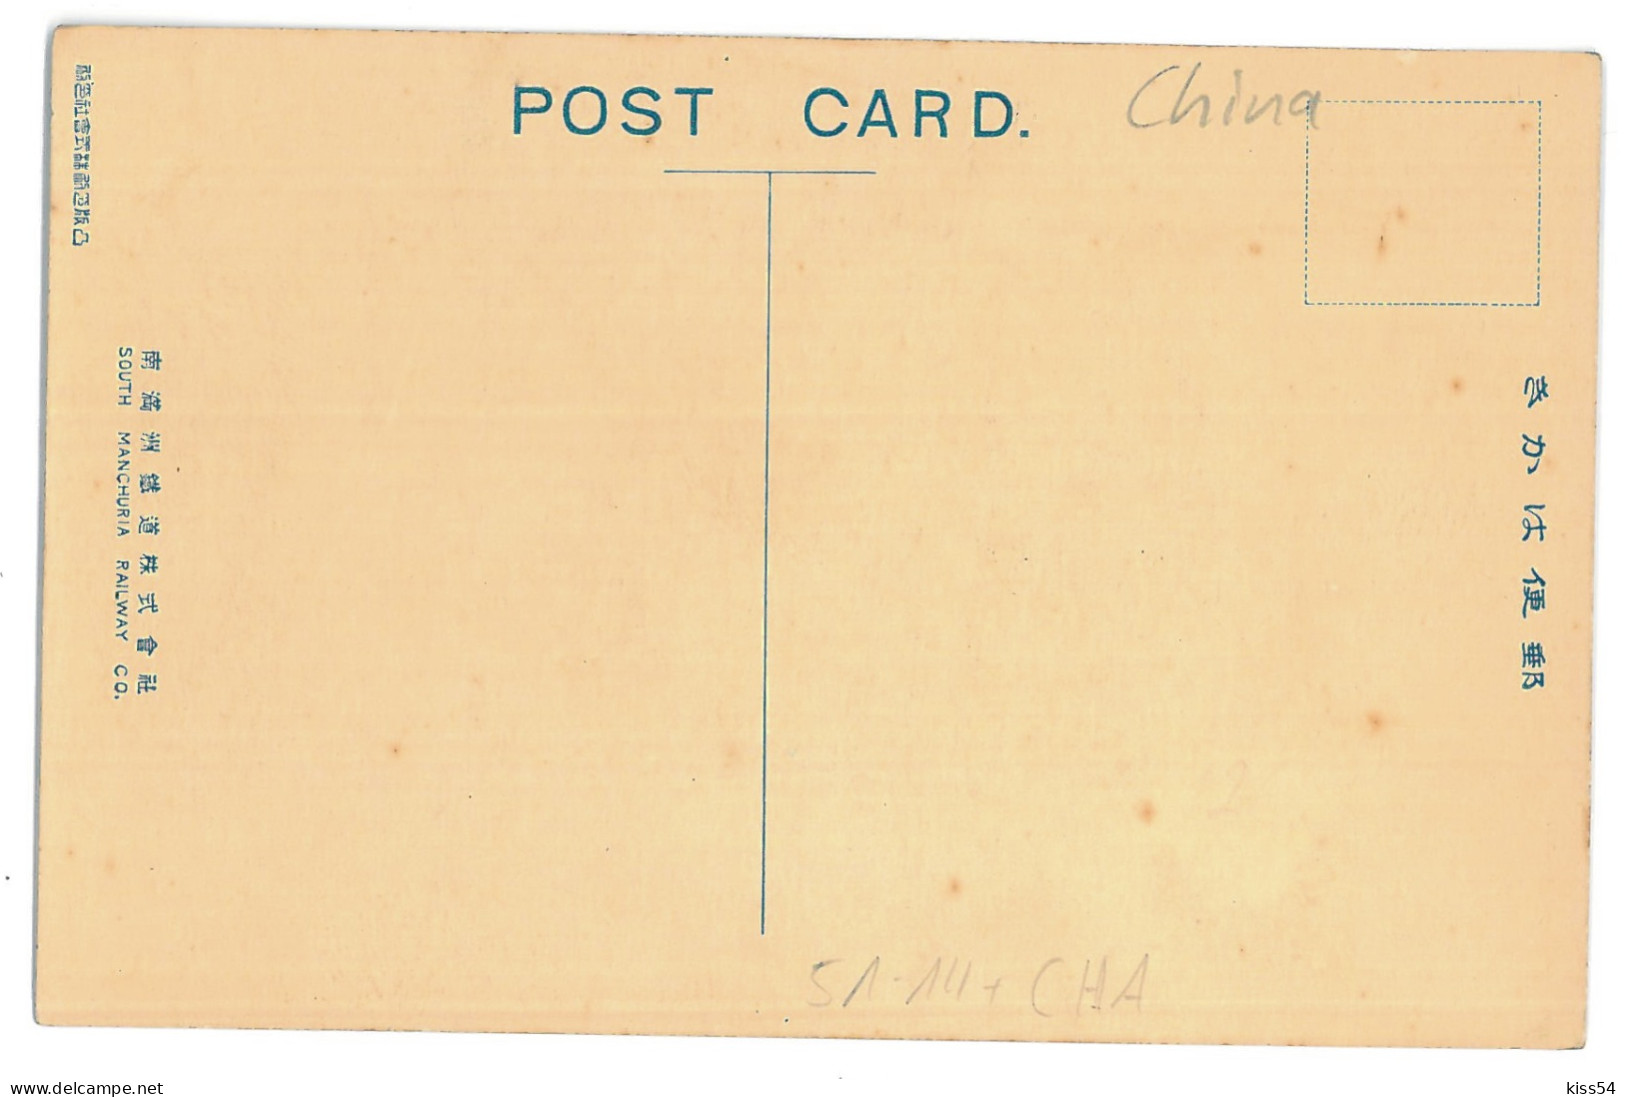 CH 89 - 14213 CHINA - Old Postcard - Unused - China